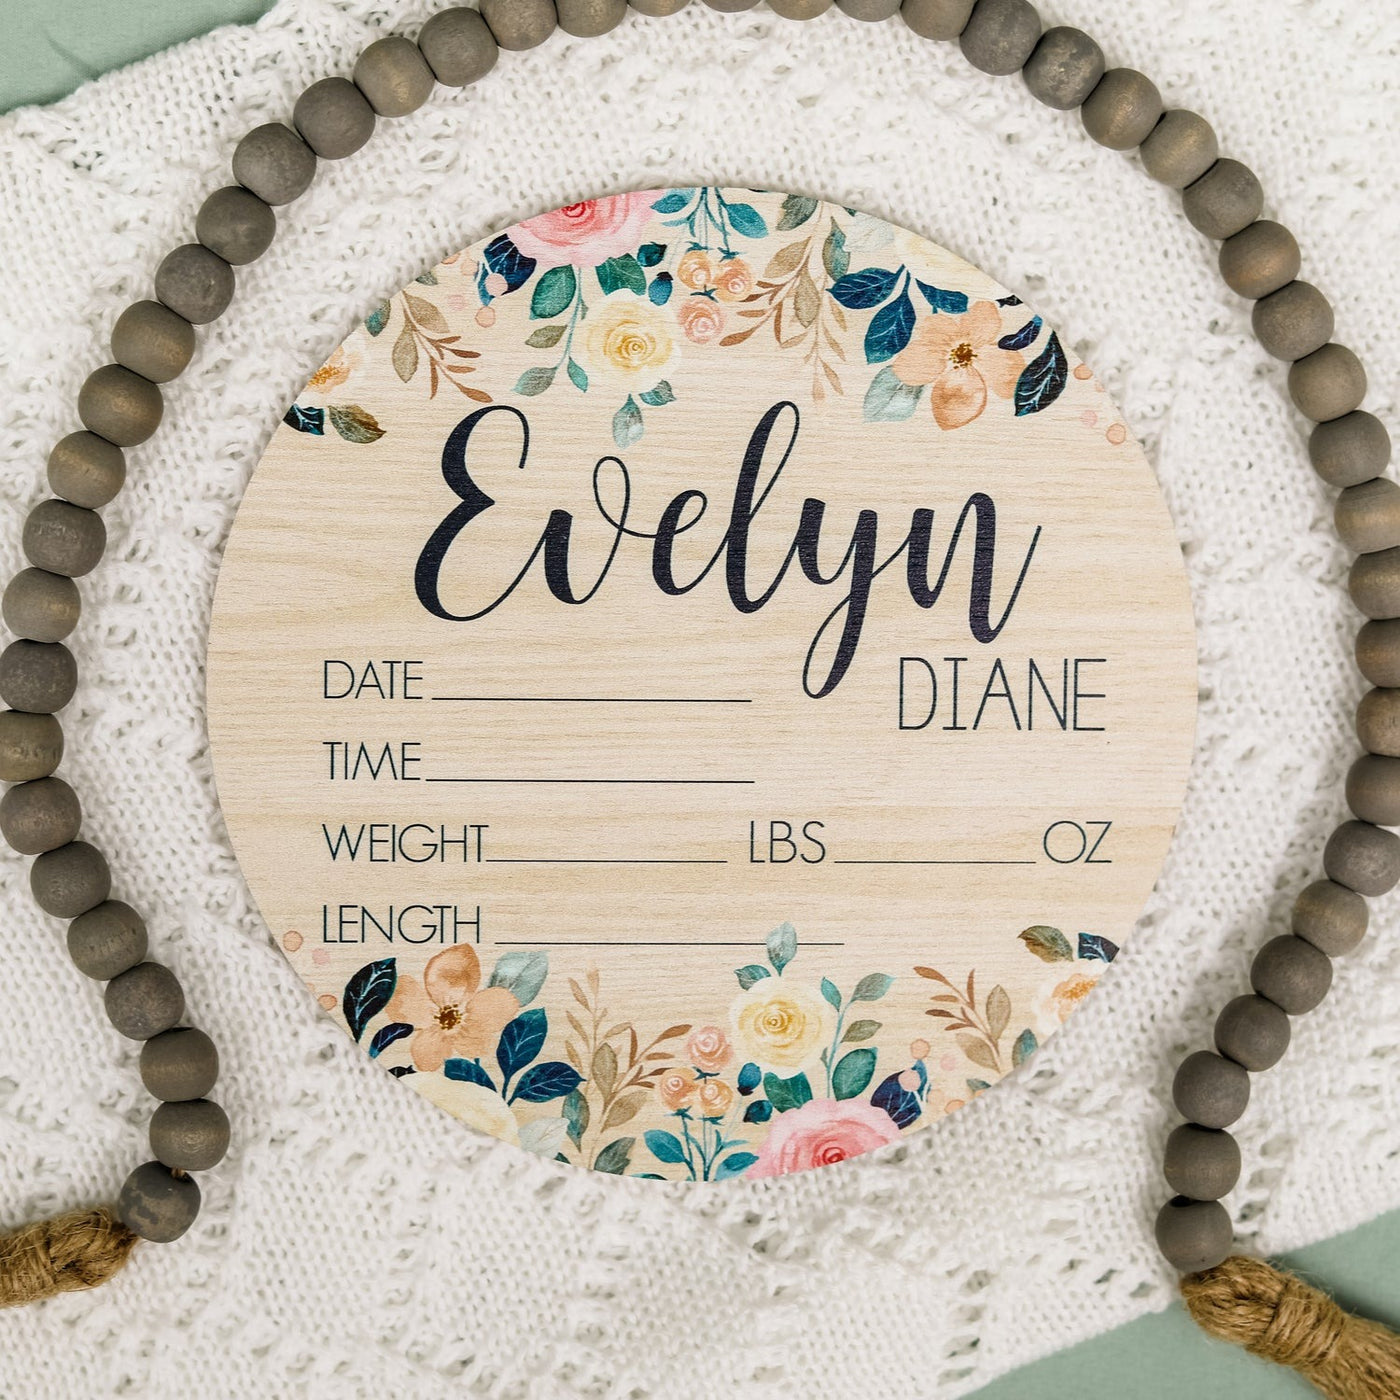 Evelyn Diane Flowers Birth Stat